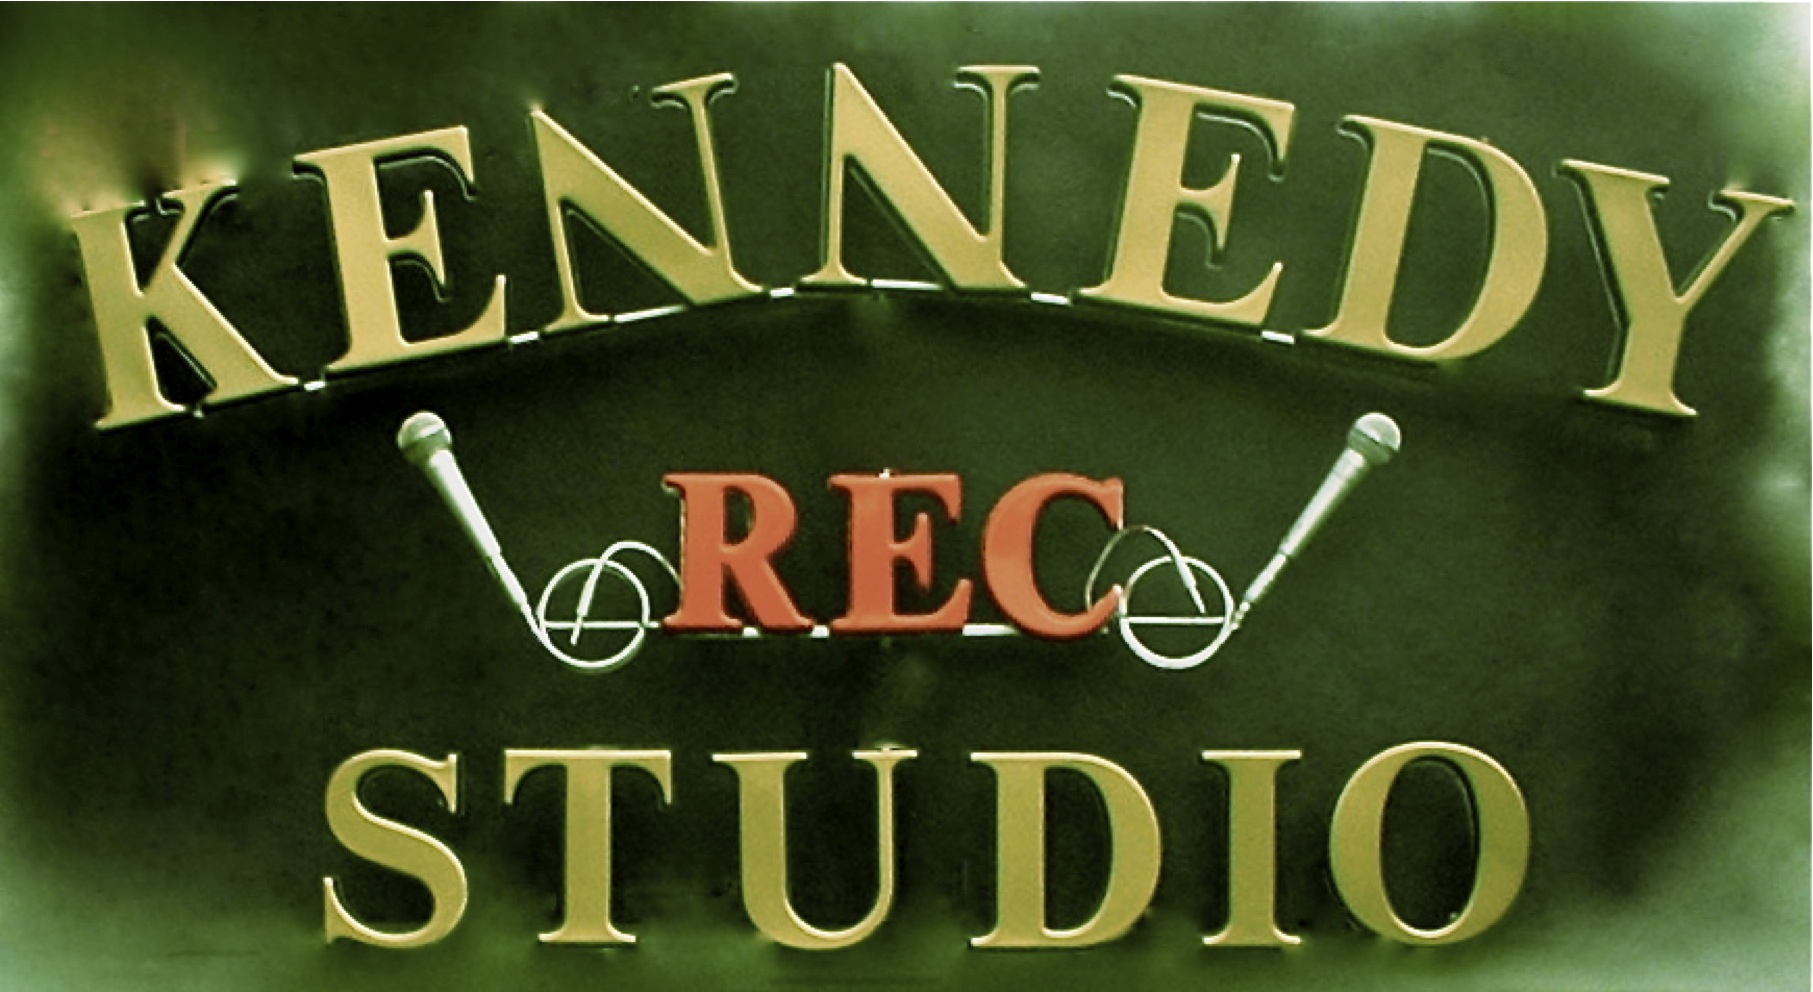 Kennedy recording studio